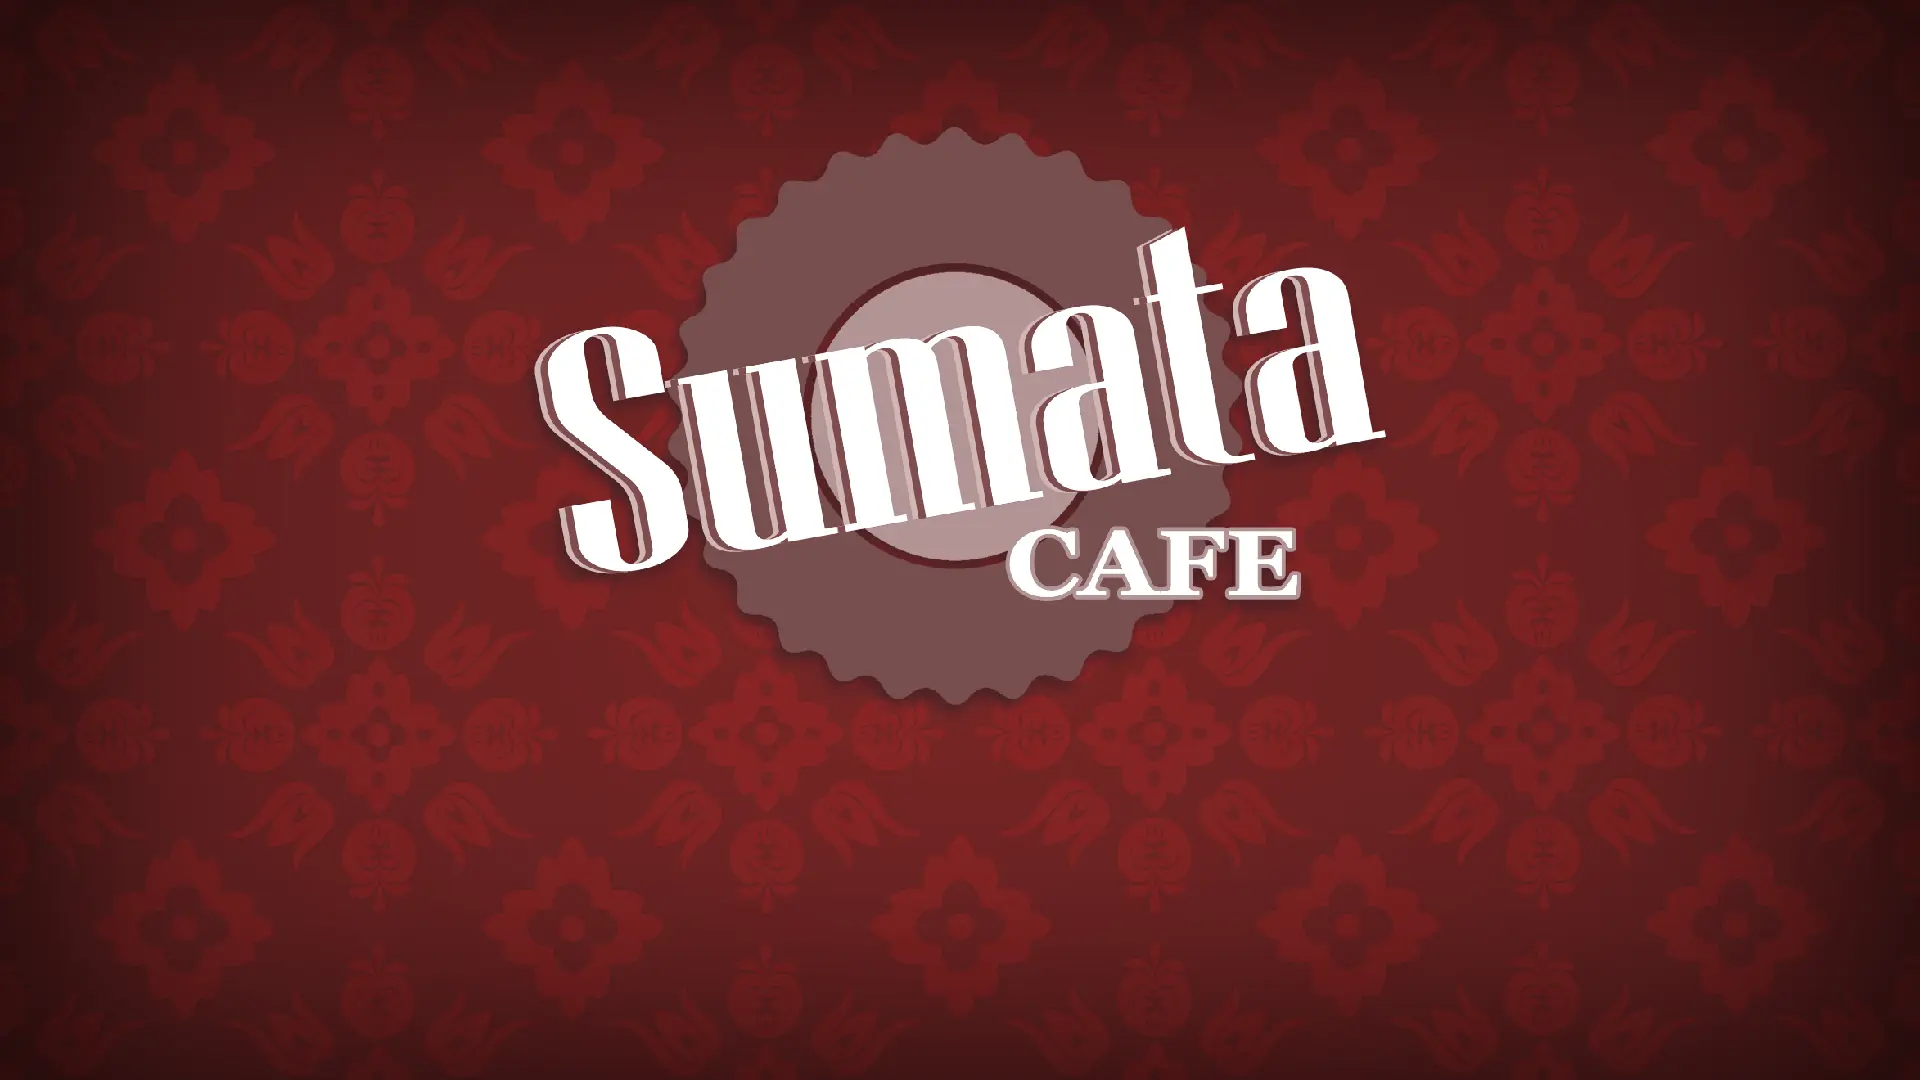 Sumata Café [v.1.0] main image